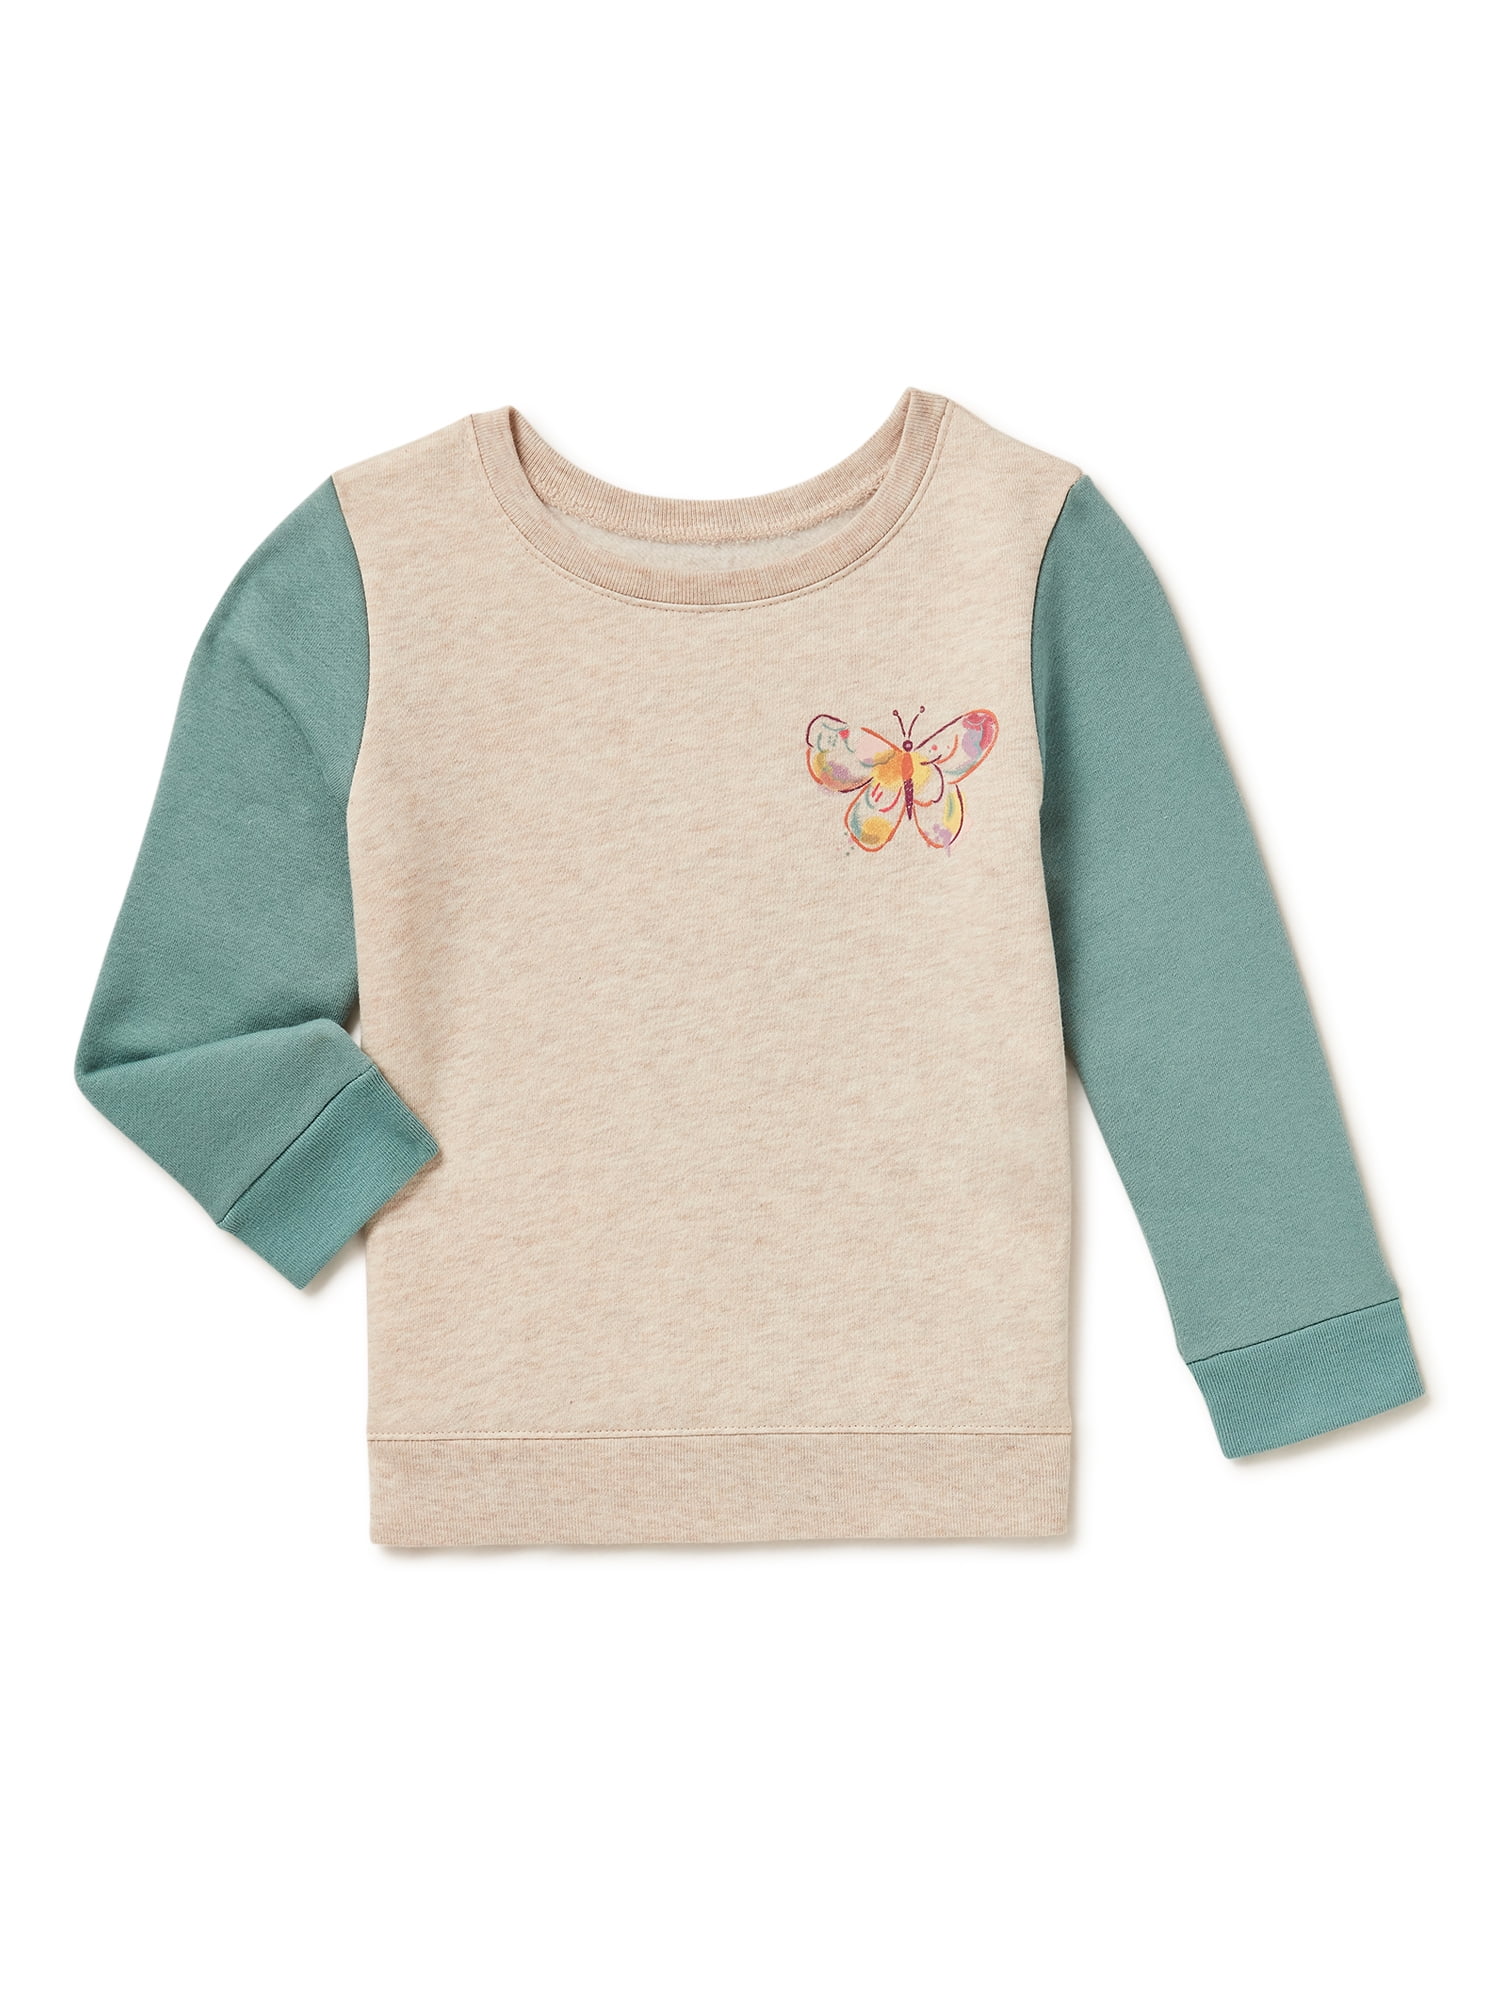 Garanimals Toddler Girls Long Sleeve Graphic Fleece Top, Sizes 2T-5T ...